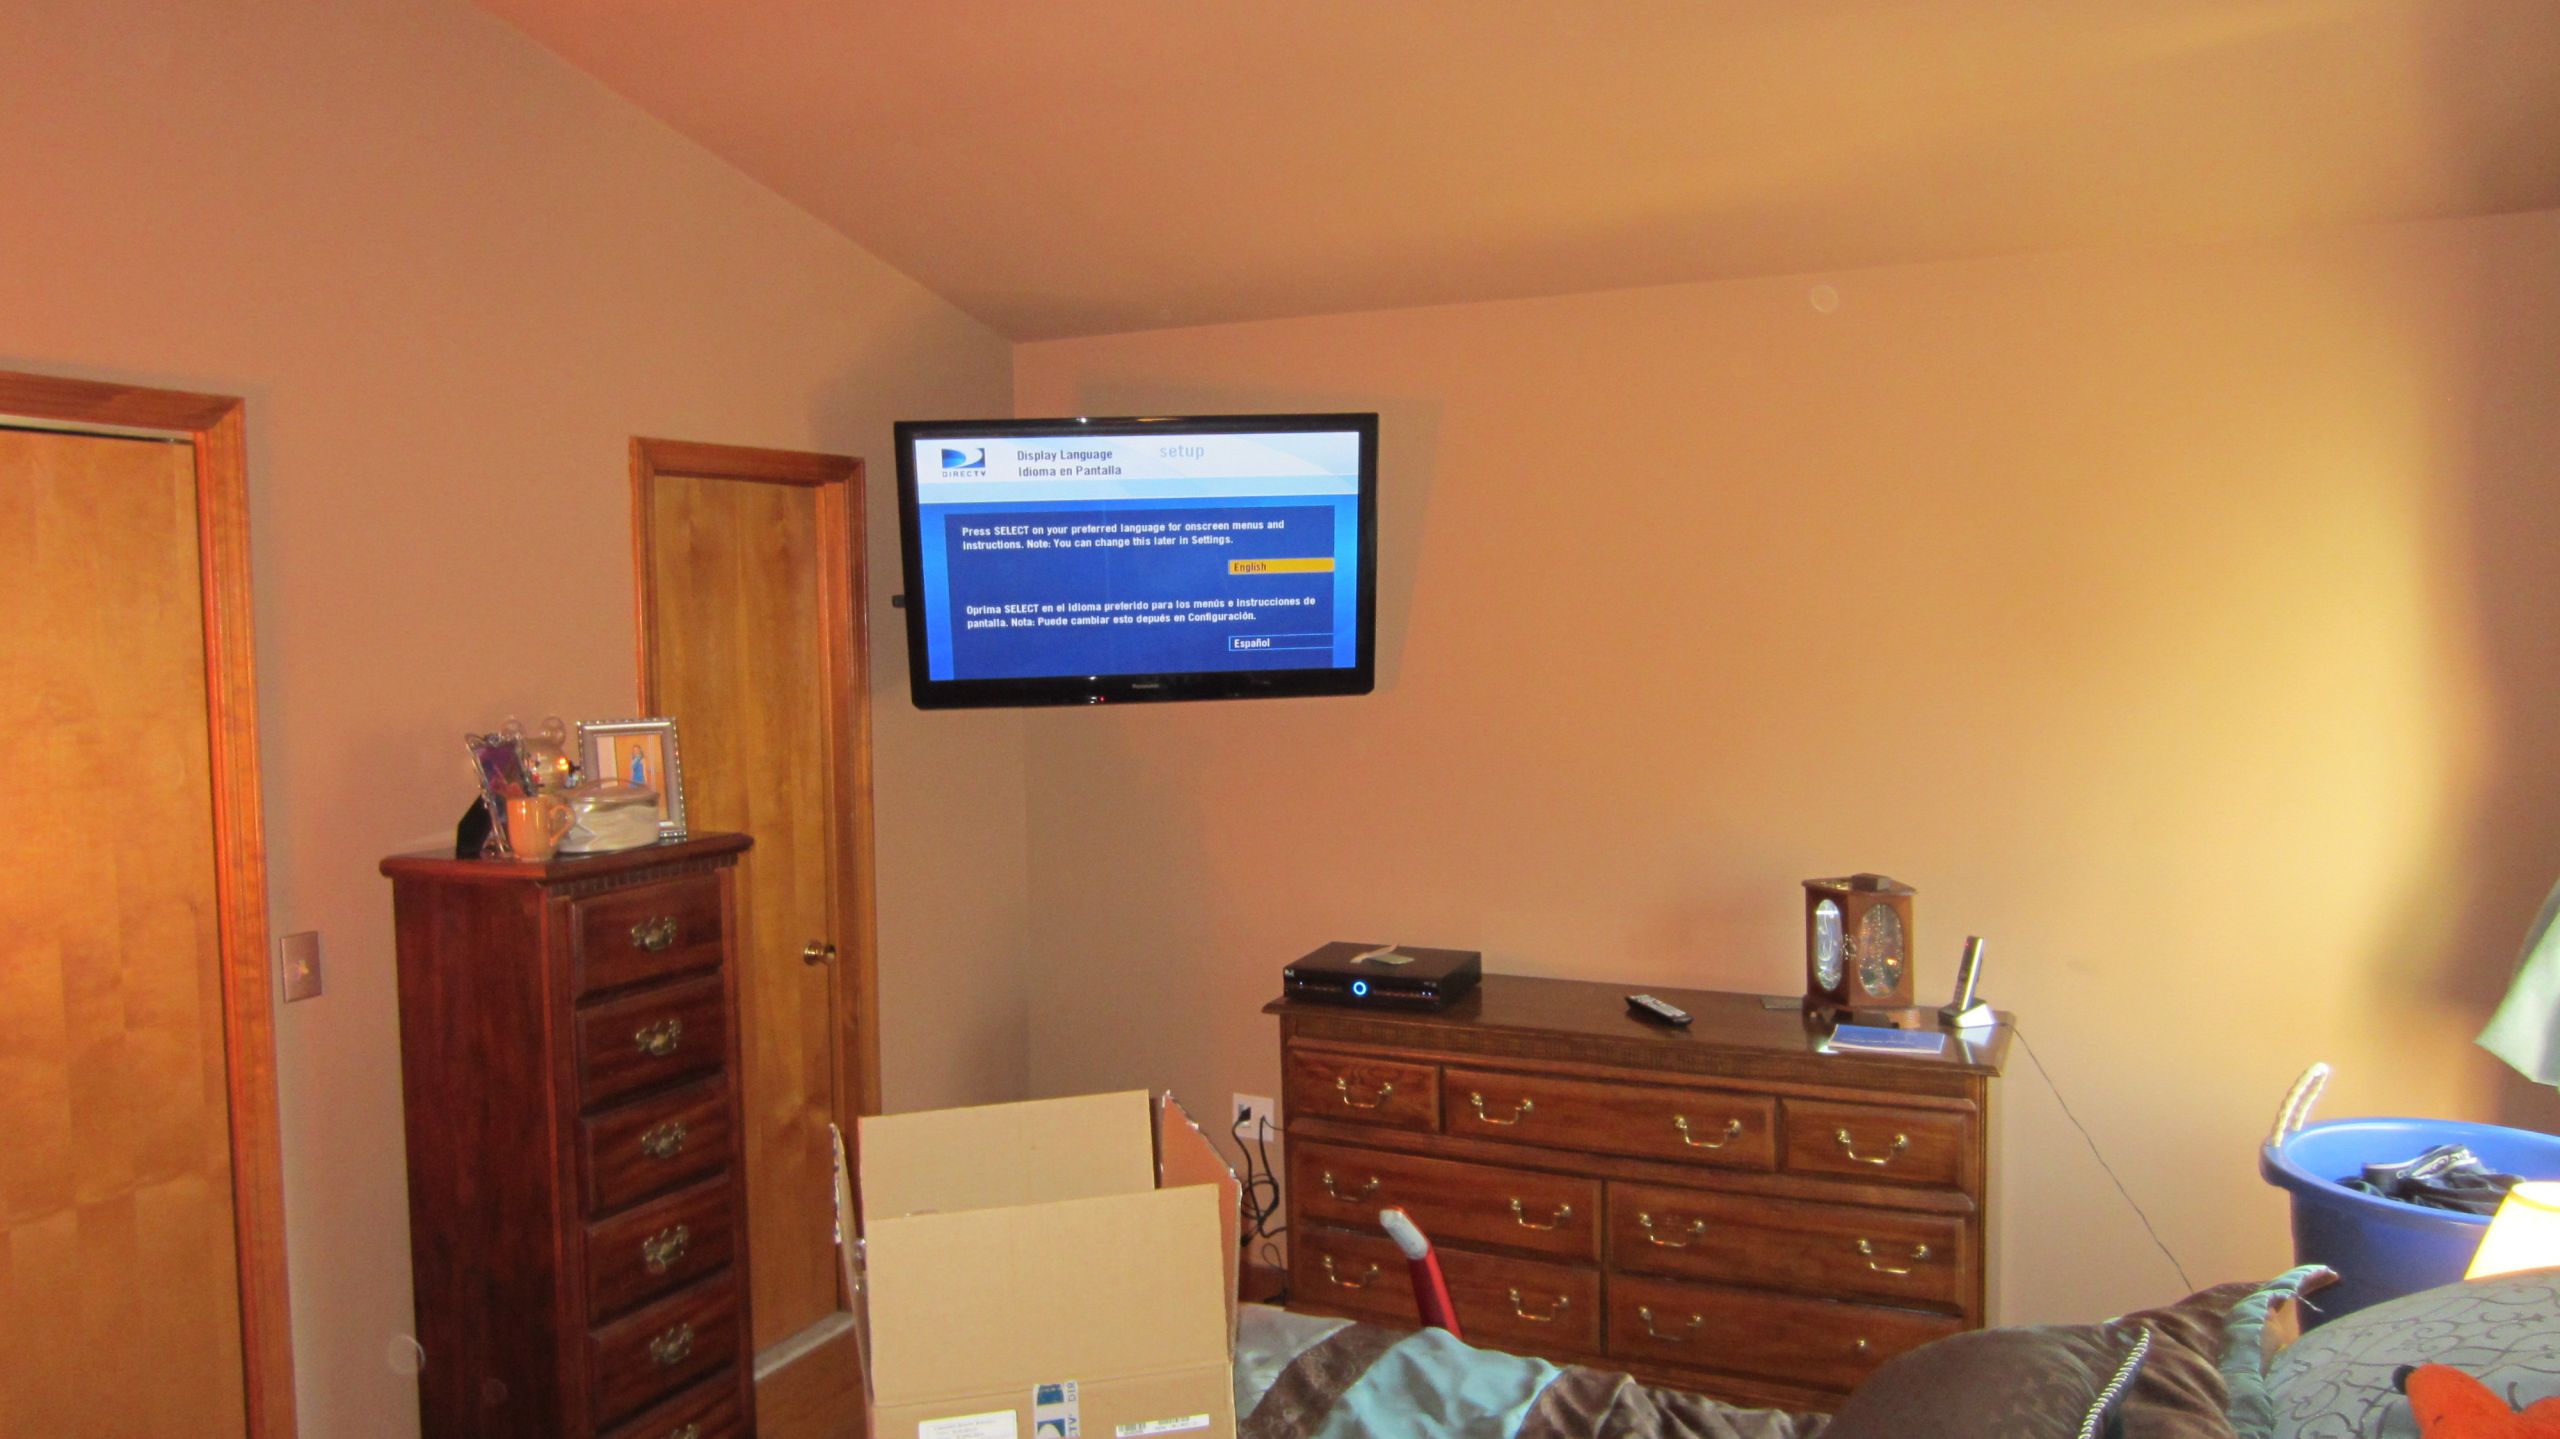 Bedroom Tv Wall Mount
 Fairfield CT mount tv on wall